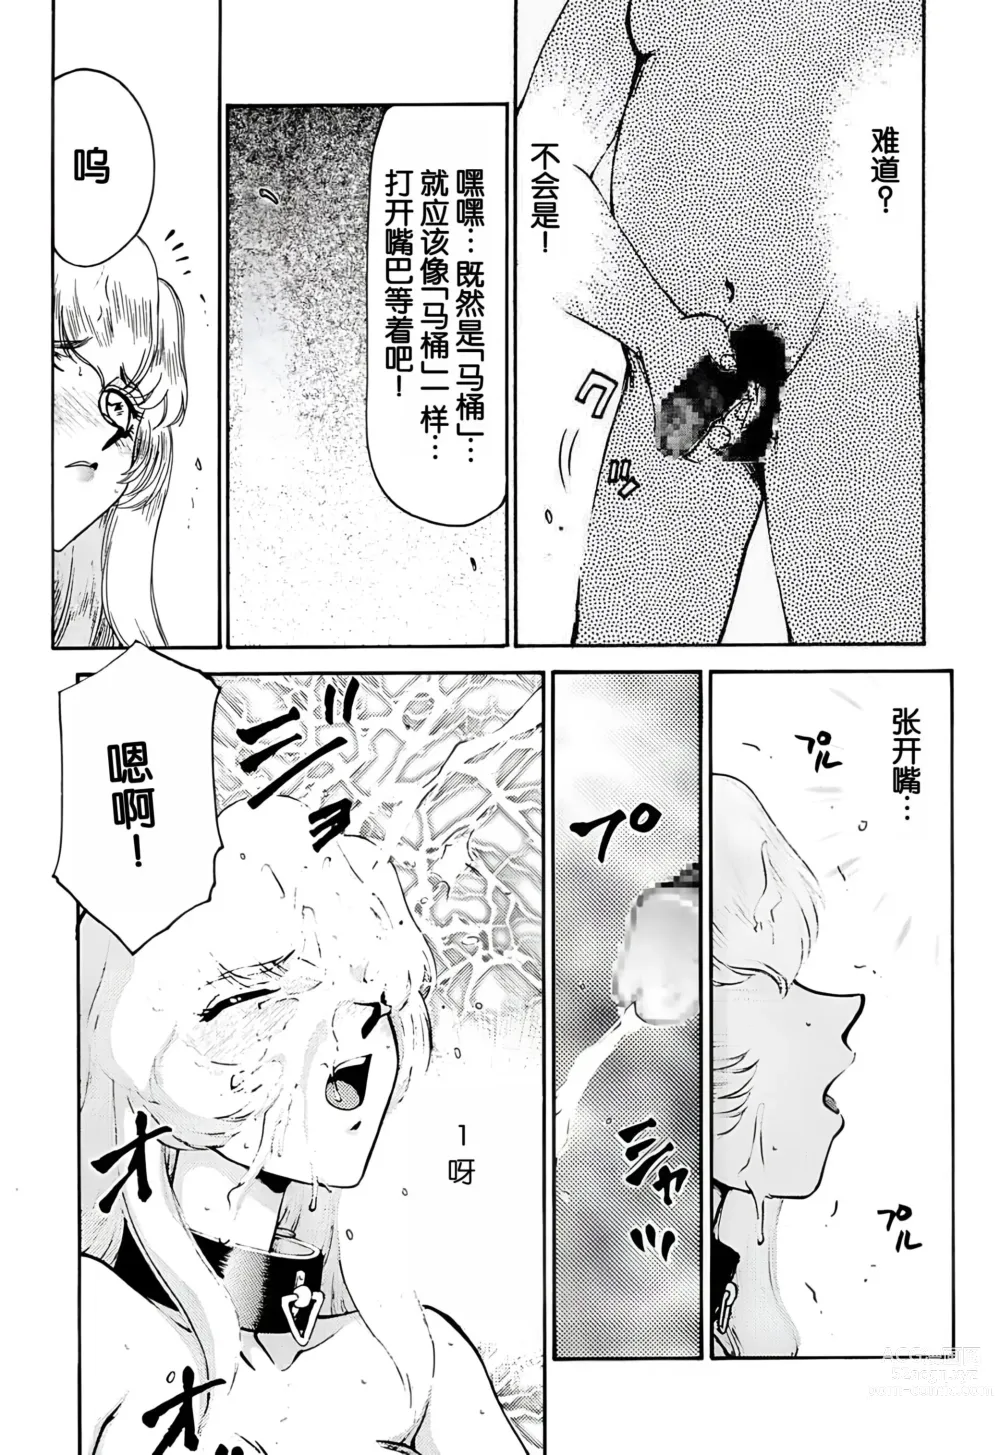 Page 83 of doujinshi Nise DRAGON BLOOD! 2.